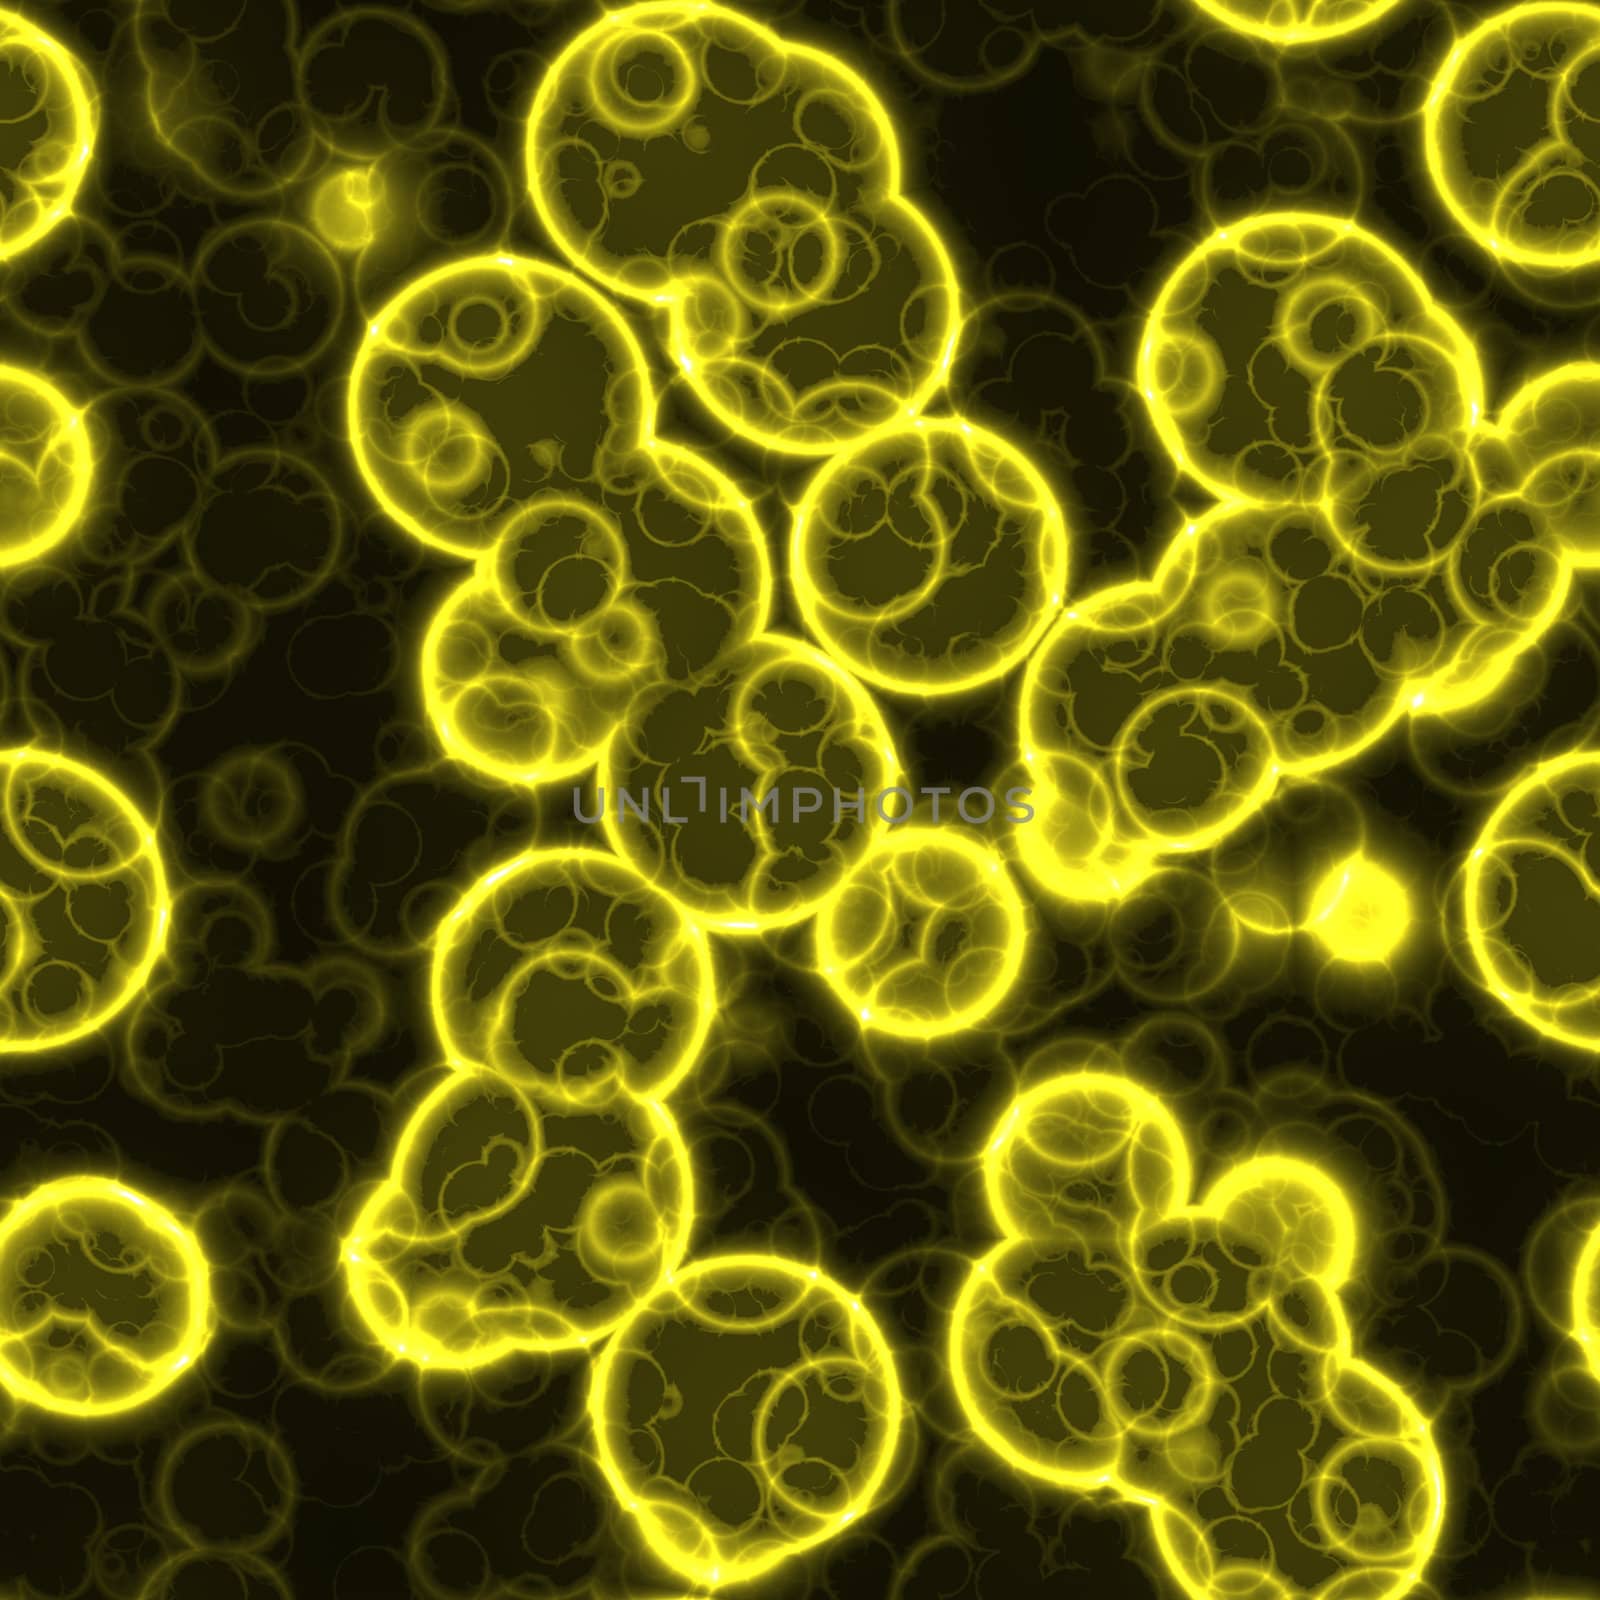 Yellow cells background by jbouzou